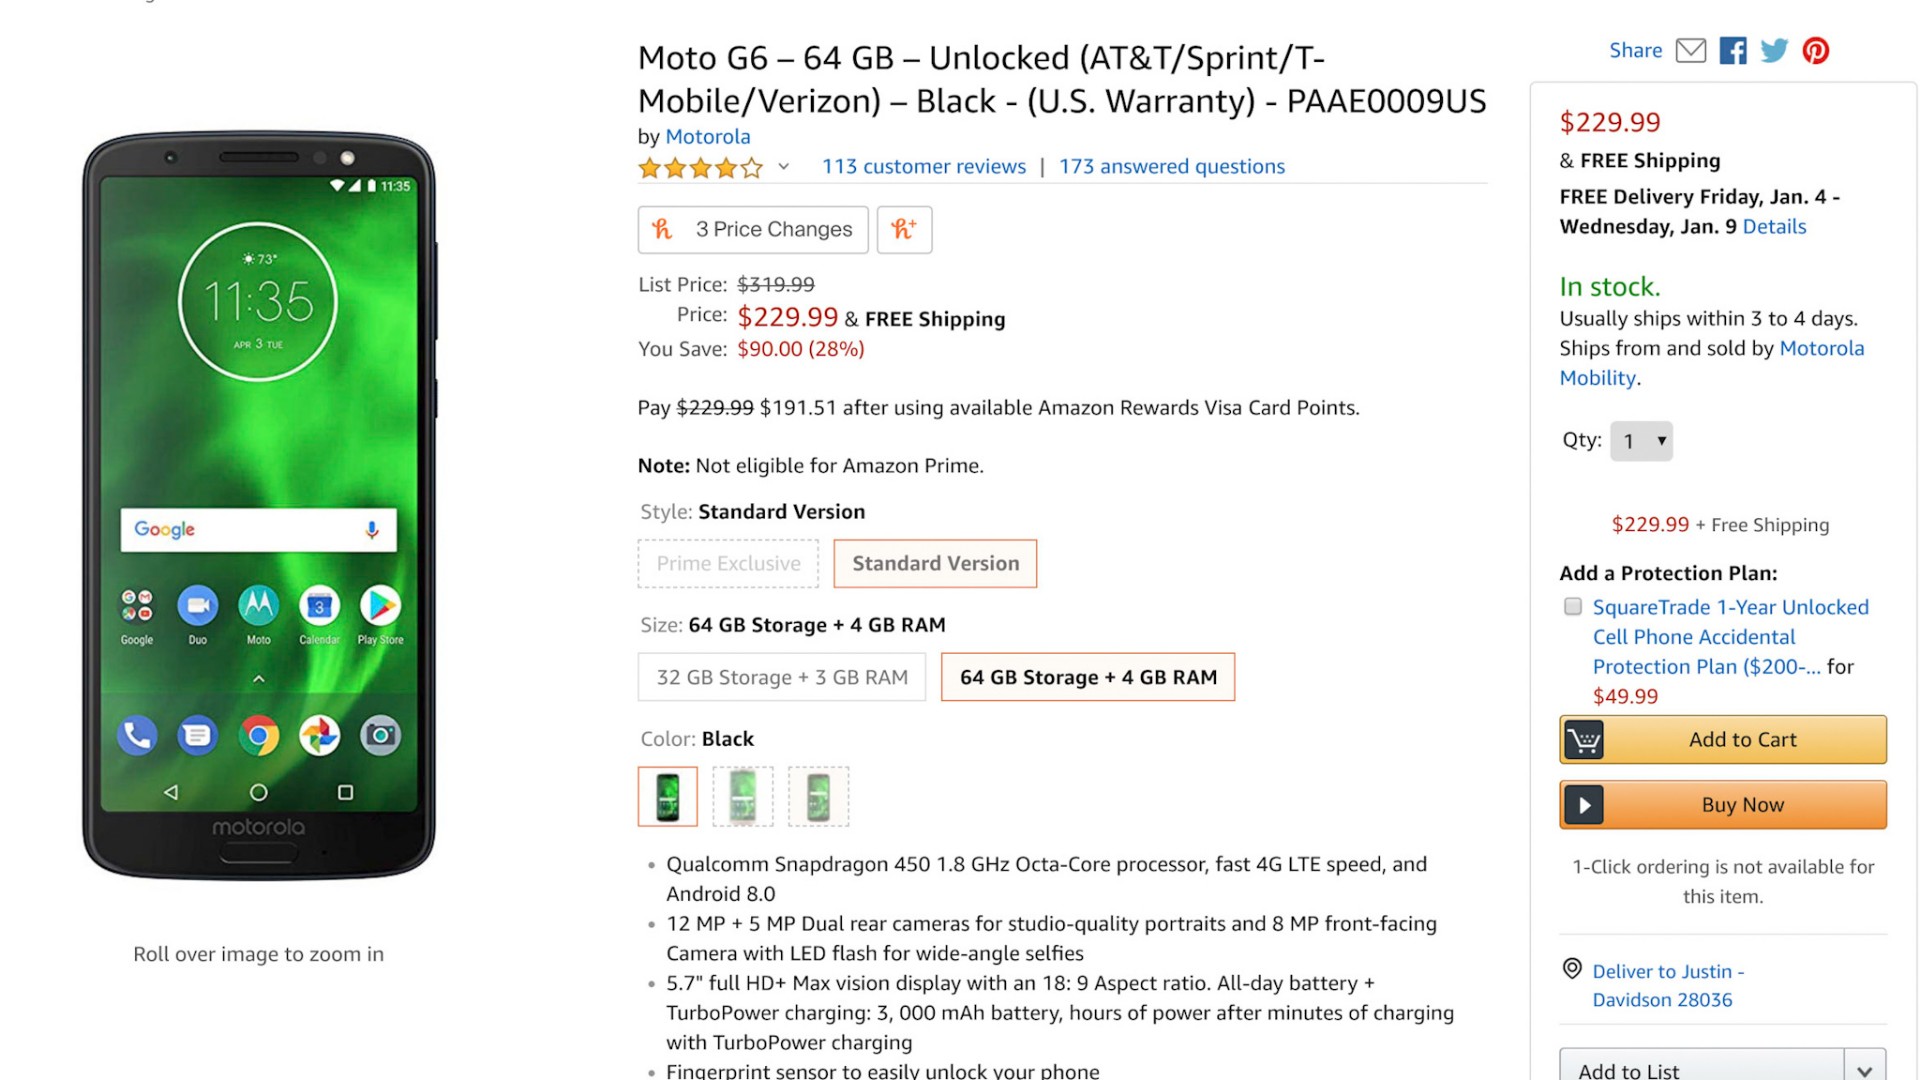 Moto G6 Amazon Deal